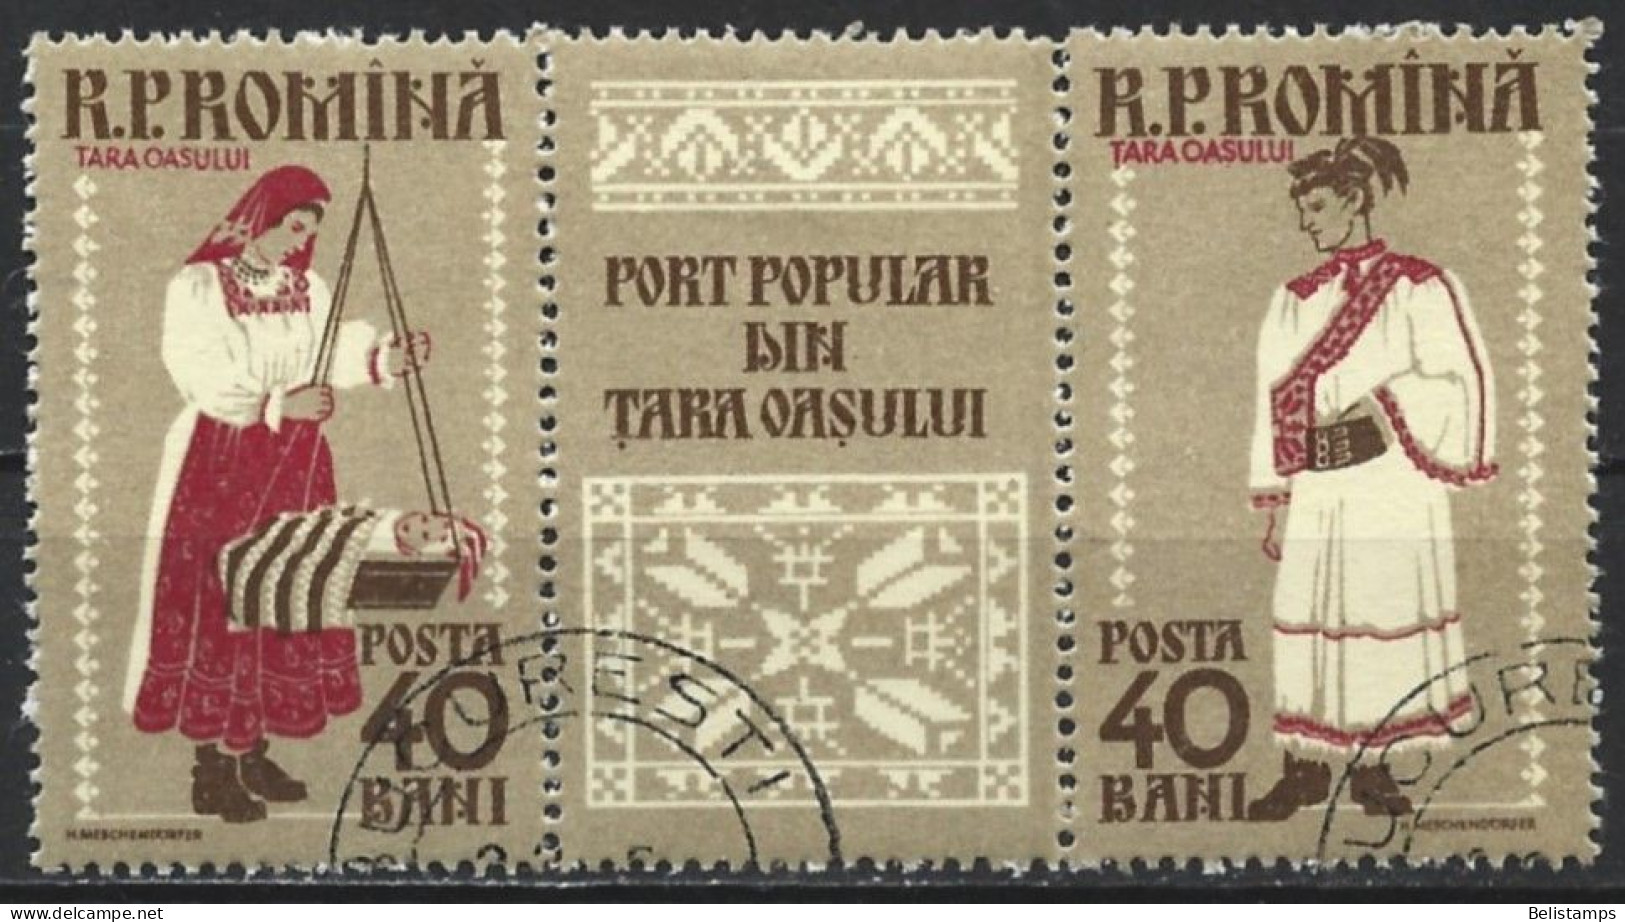 Romania 1958. Scott #1241 (U) Regional Costumes From Tara Oasului - Used Stamps